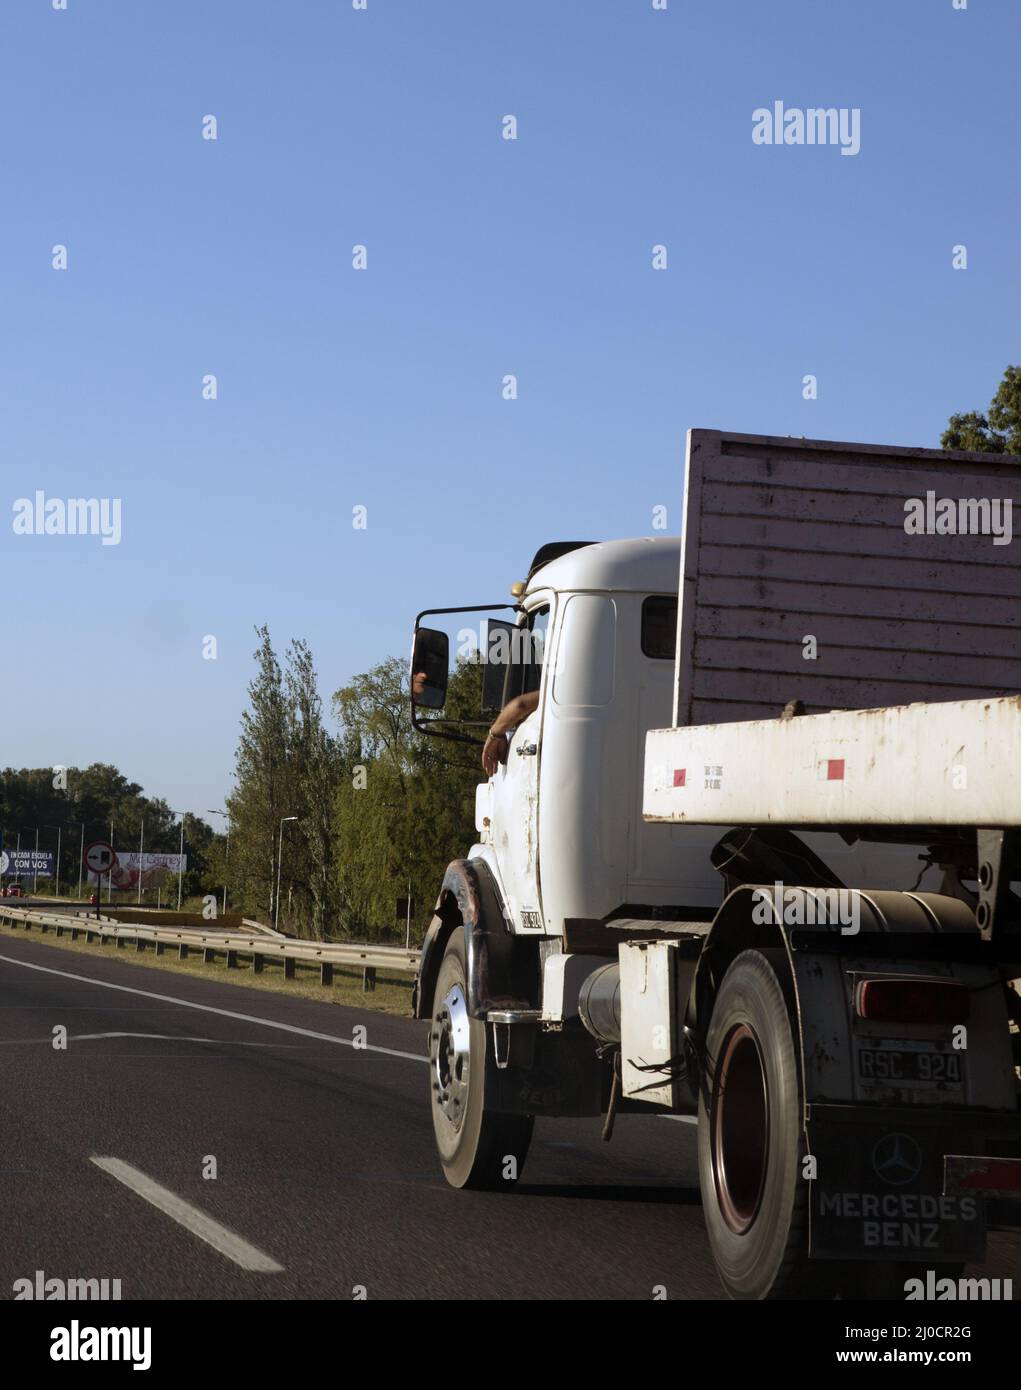 Truck Stock Photo